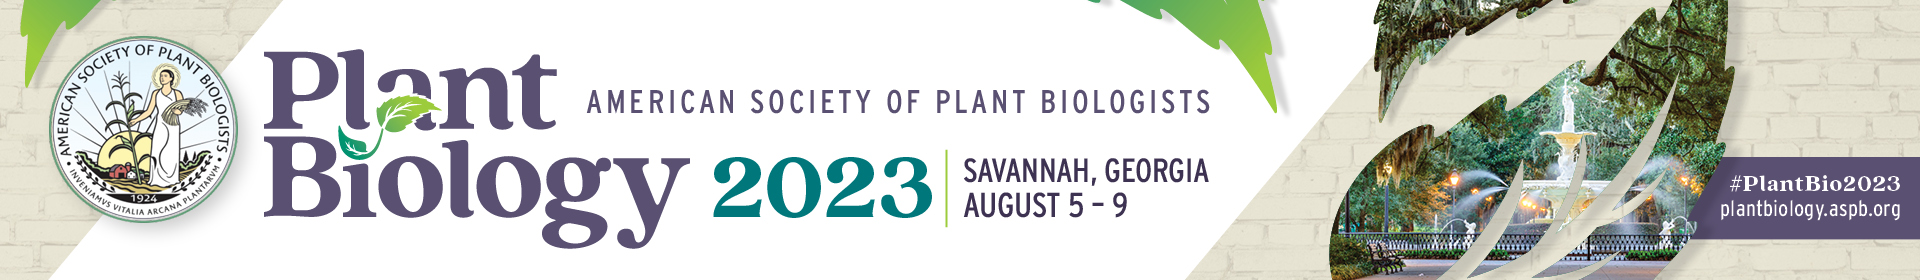 Plant Biology 2023 Event Banner